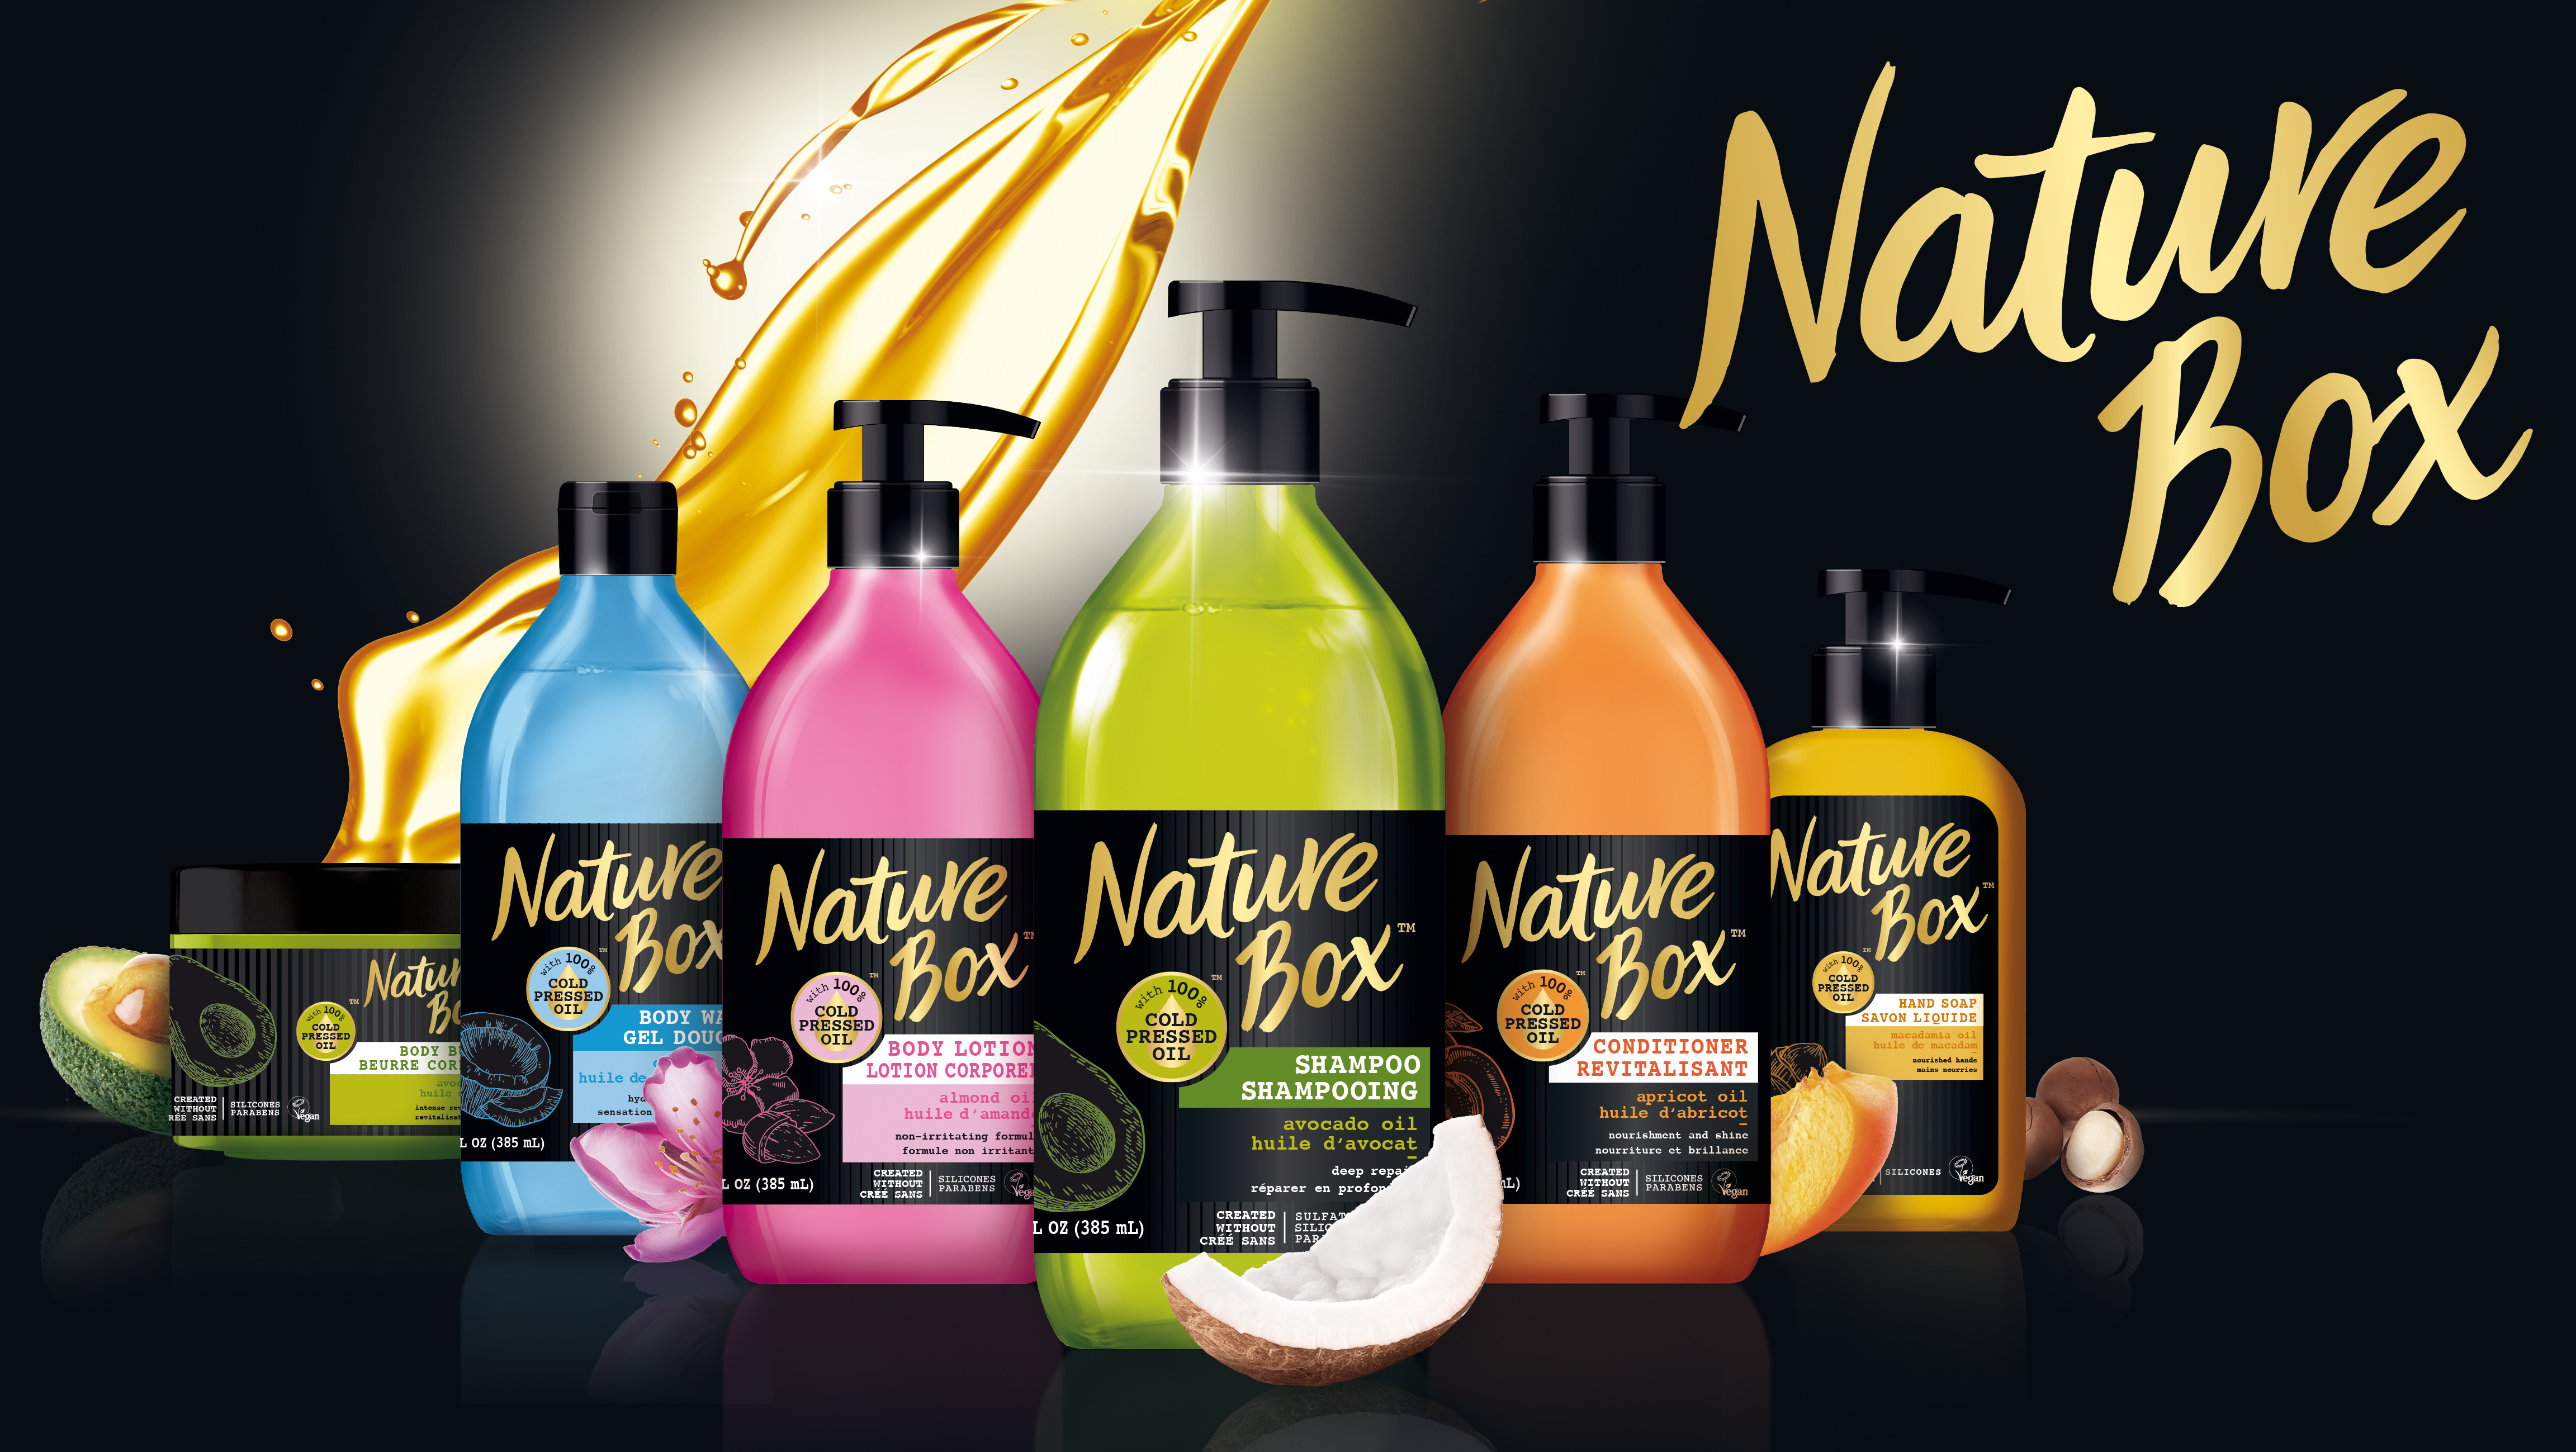 Natural box. Shampoo brands. Nature Box Henkel hair Oil. Шампунь авокадо натуре бокс. Nature Box Avocado Oil Butter 200ml.